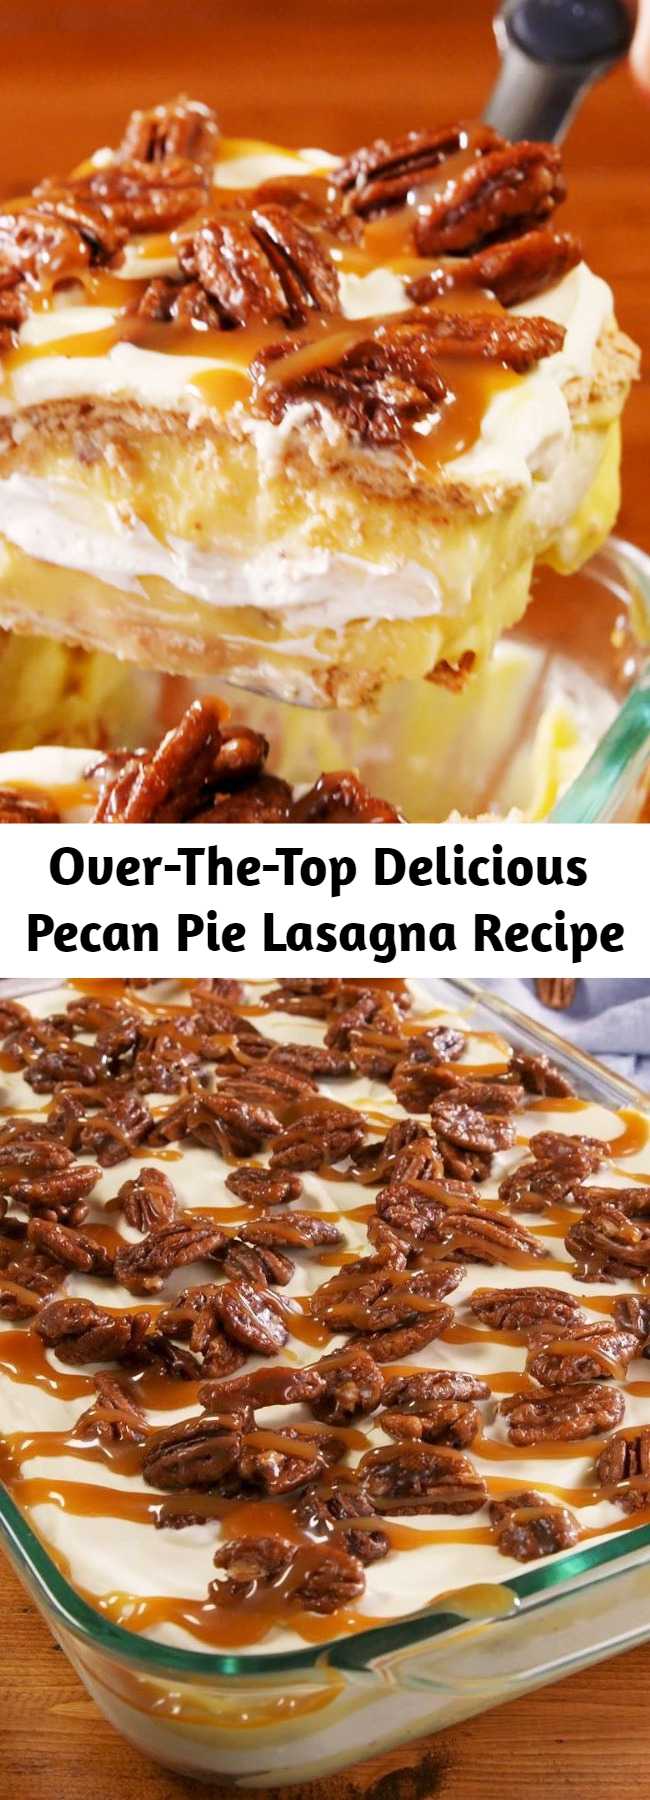 Over-The-Top Delicious Pecan Pie Lasagna Recipe - This Pecan Pie Lasagna is the ultimate layered fall dessert.